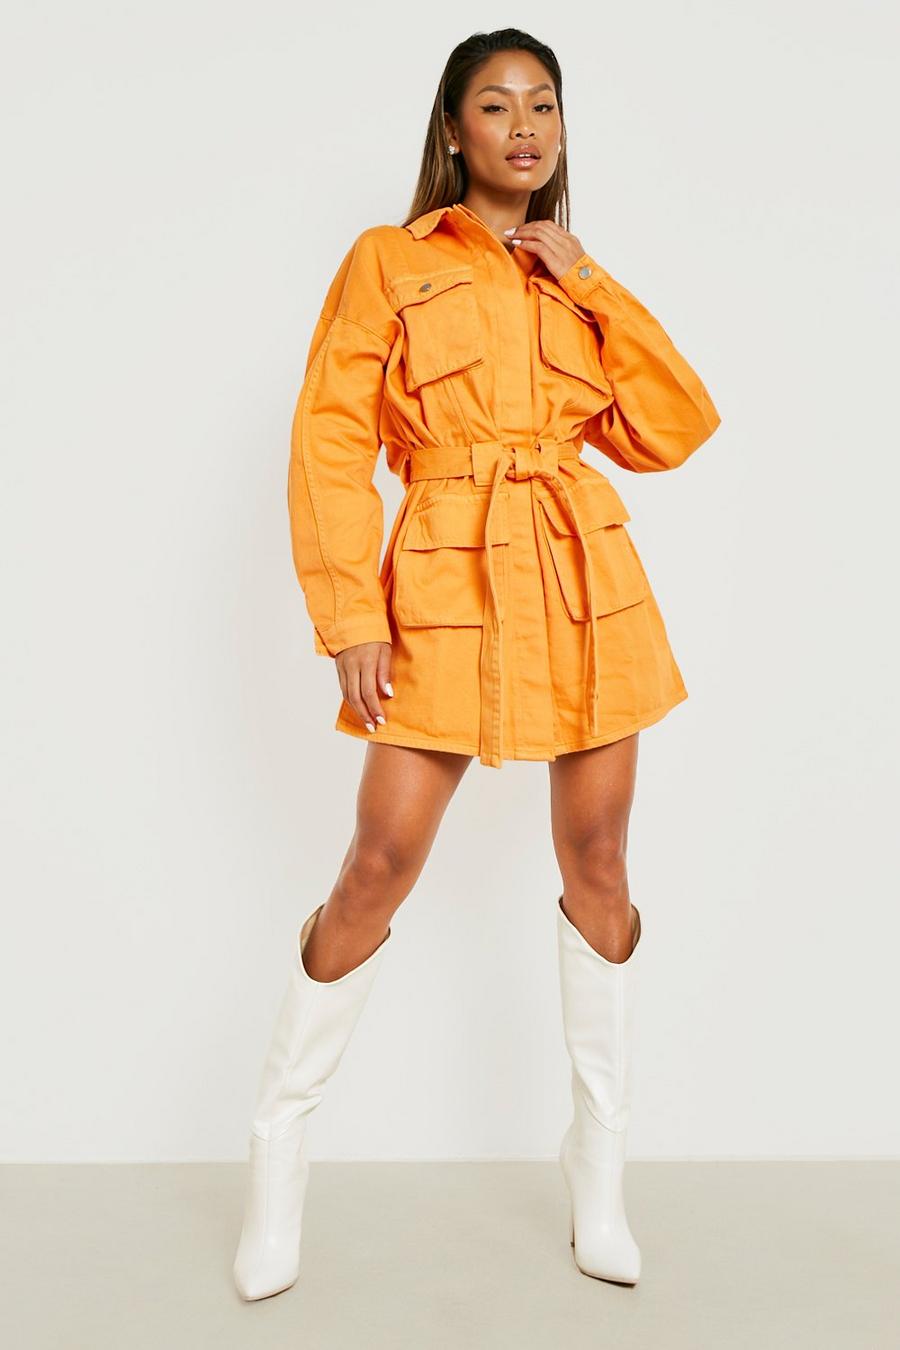 Vestido estilo camisa chaqueta con bolsillos utilitarios Premium (hasta talla 52), Orange naranja